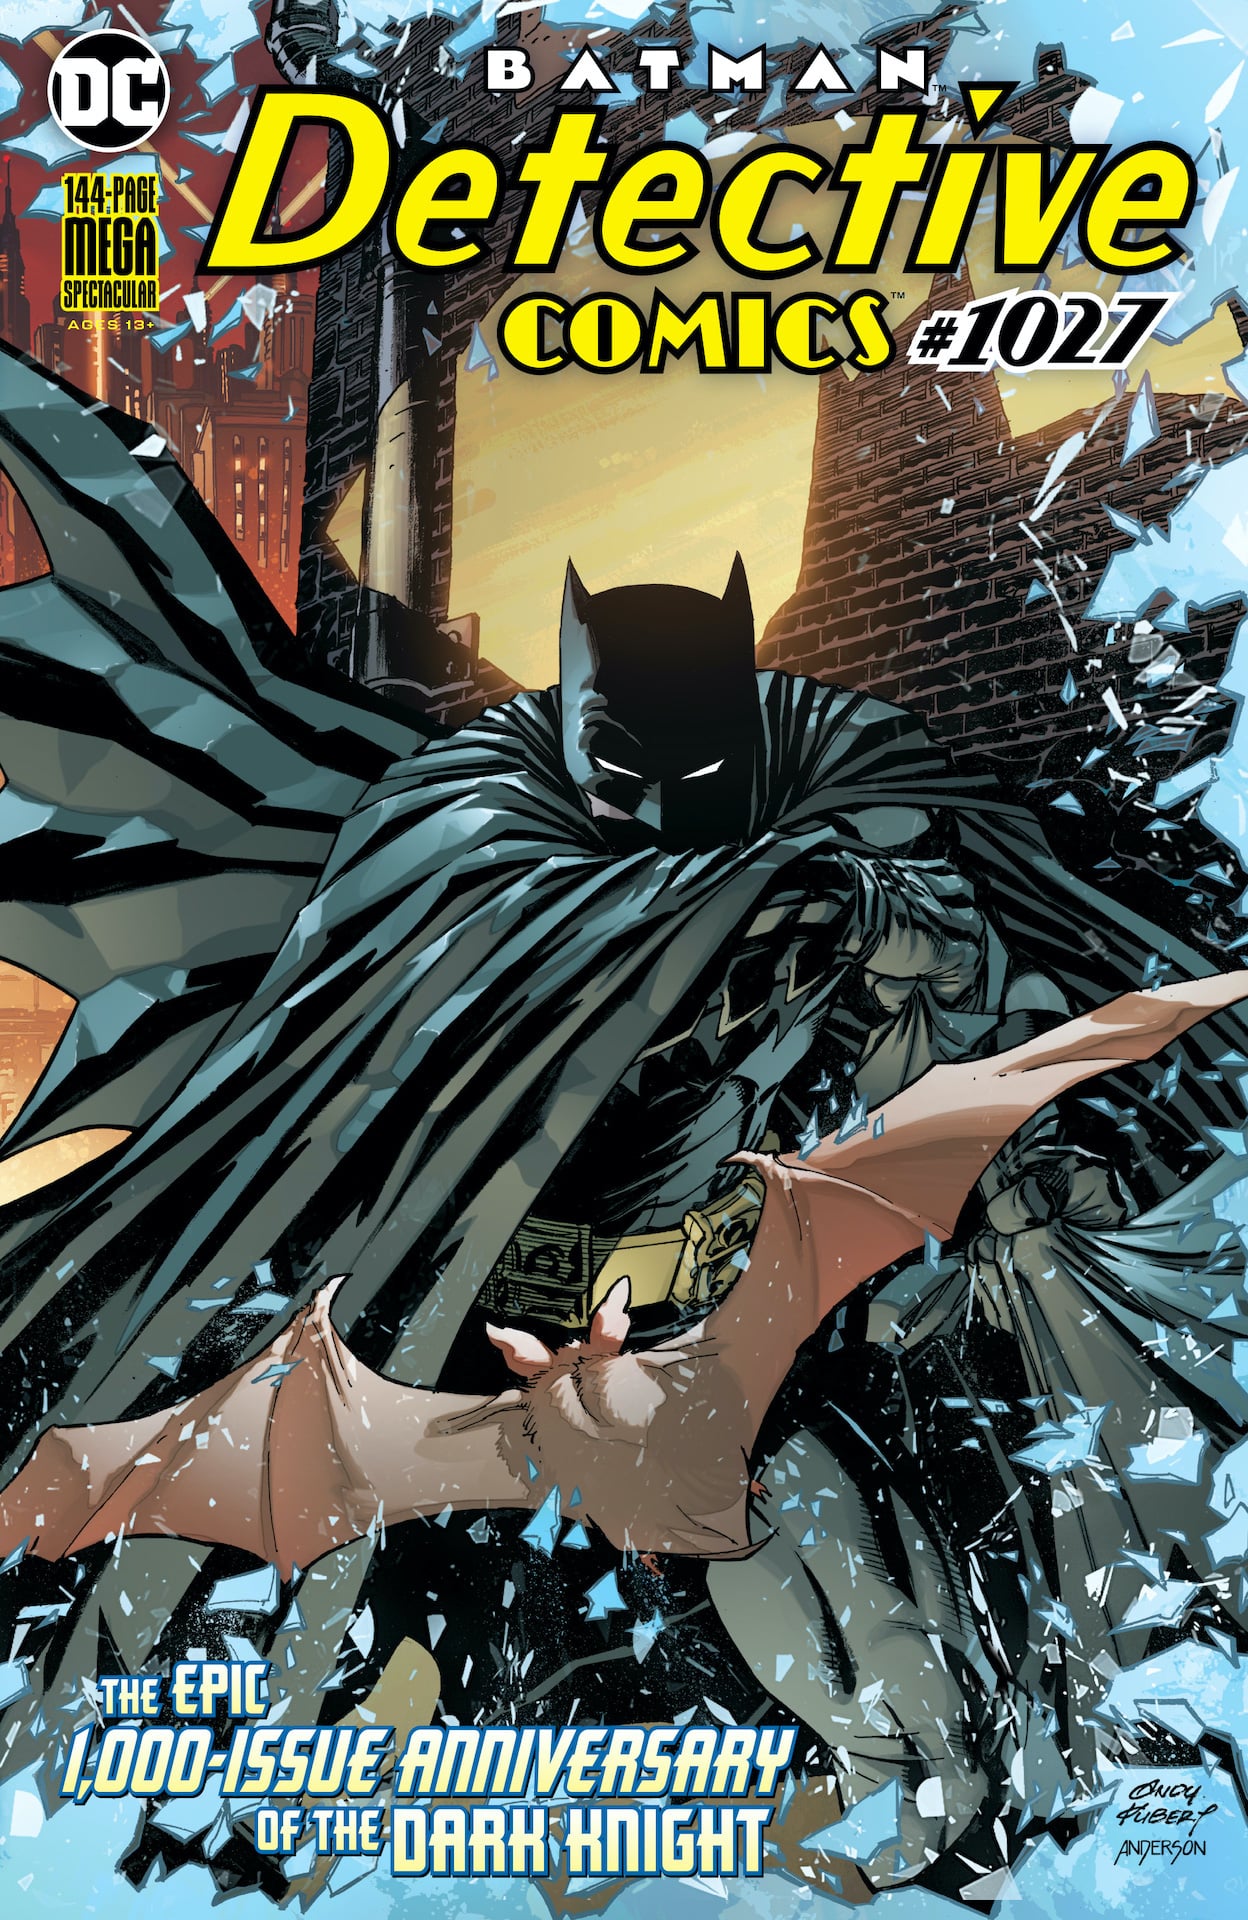 DC Preview: Detective Comics #1027